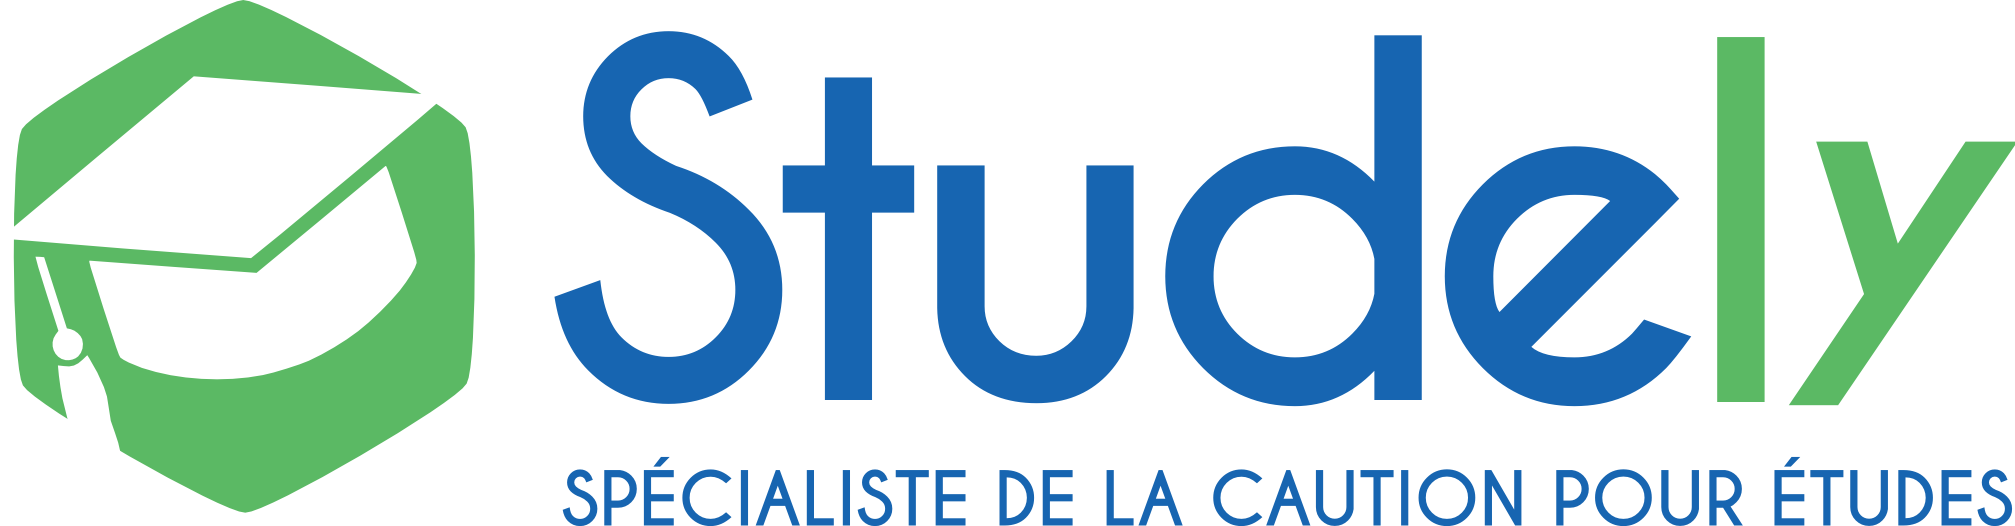 studely_logo